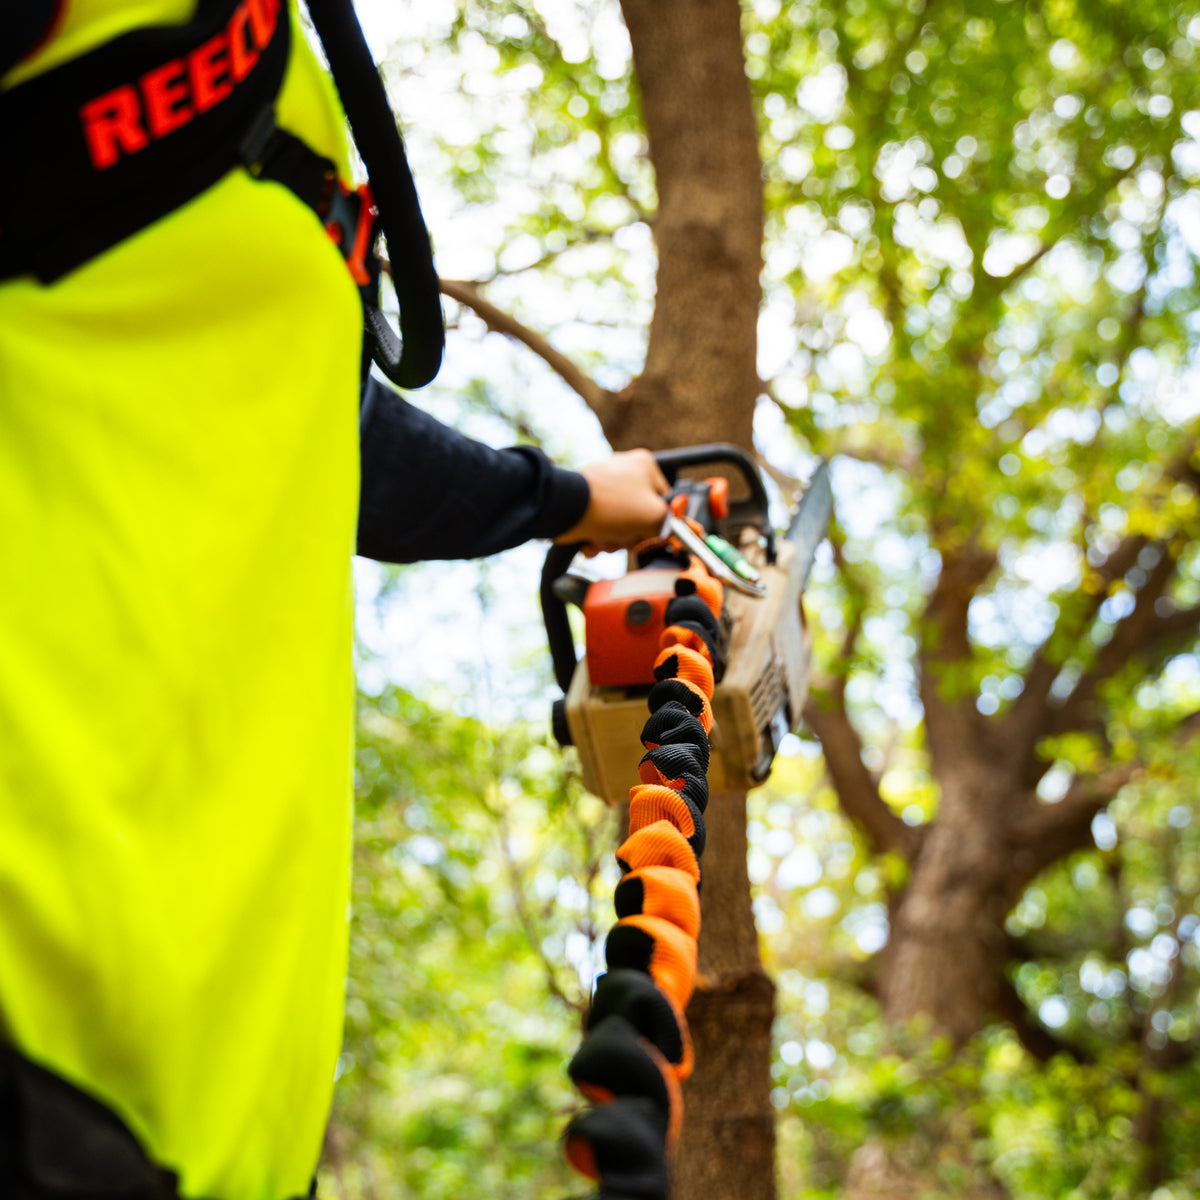 Full Reach chainsaw tool lanyard – Reecoil